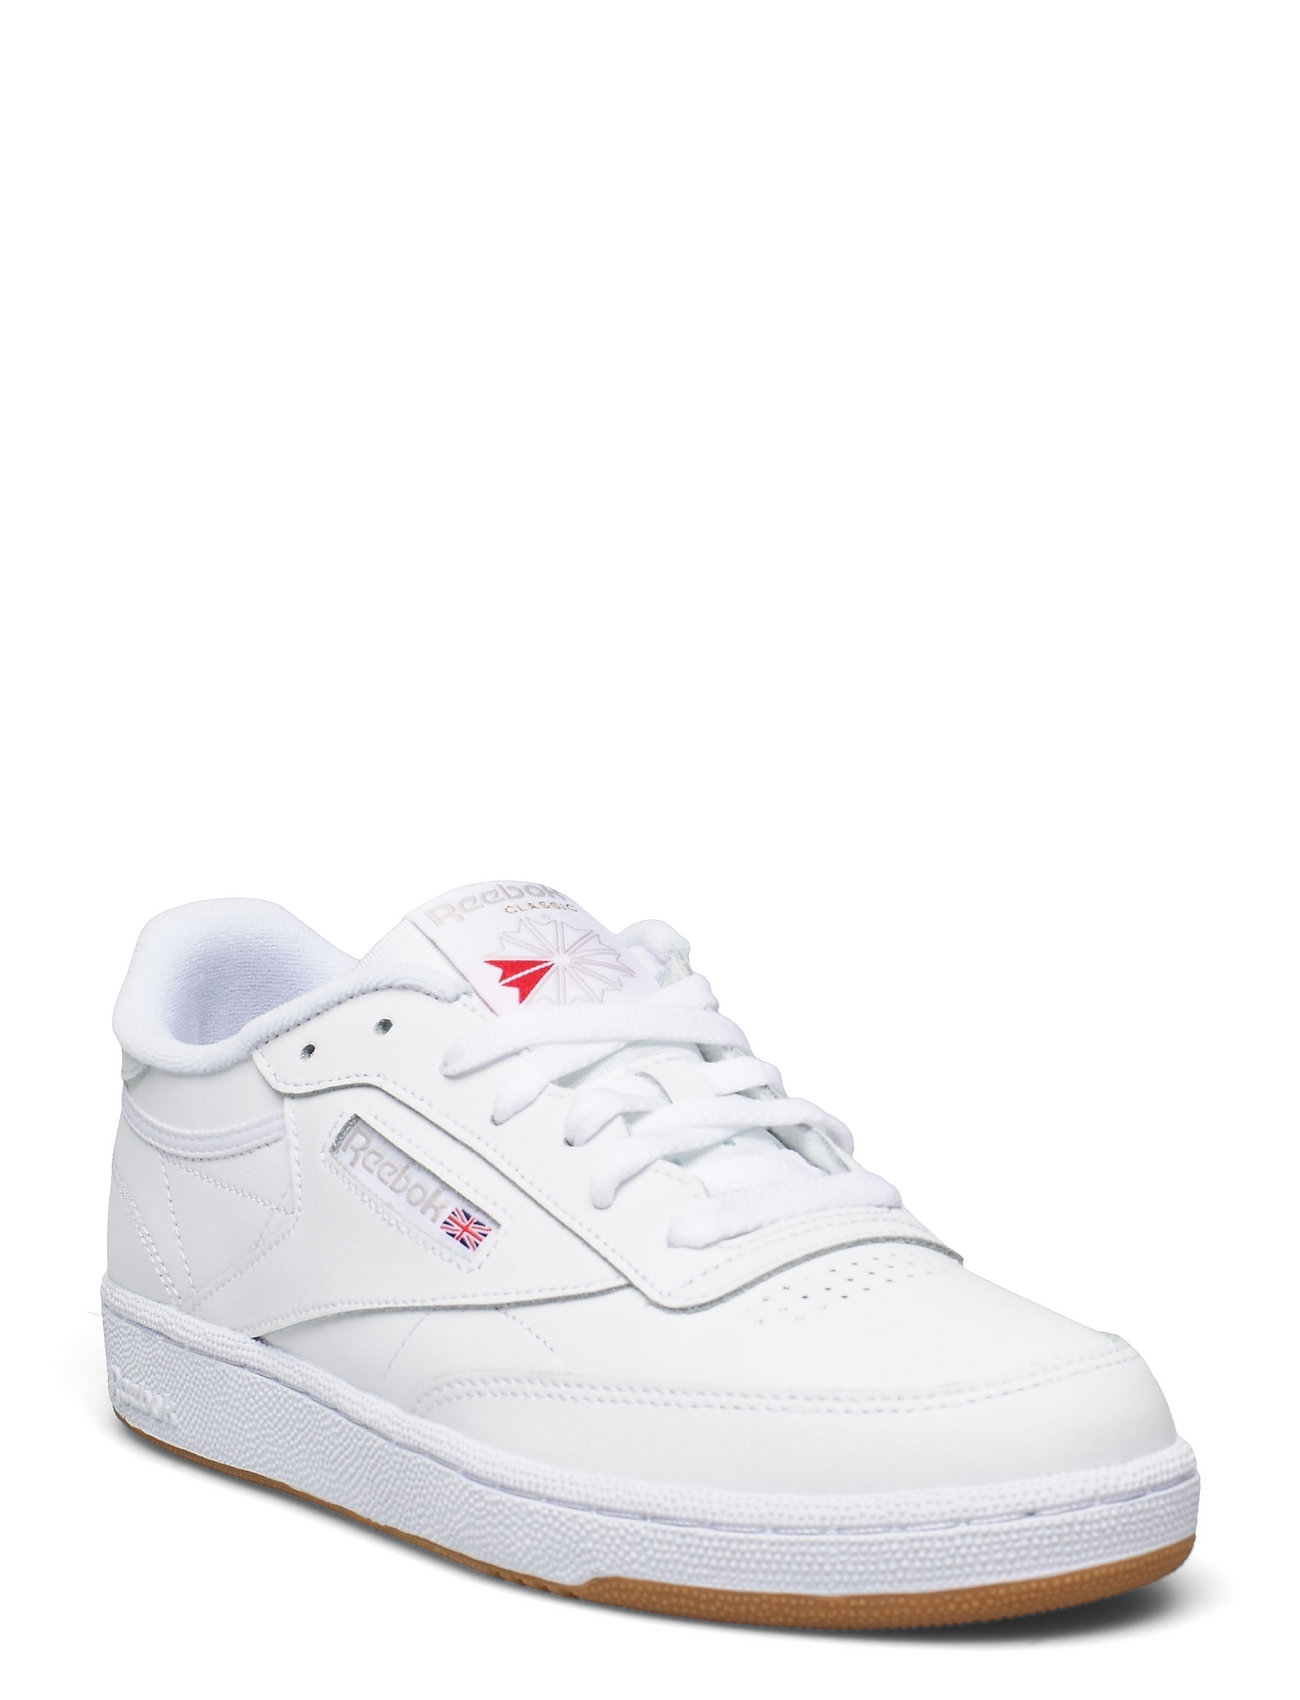 Club C 85 Low-top Sneakers White Reebok Classics